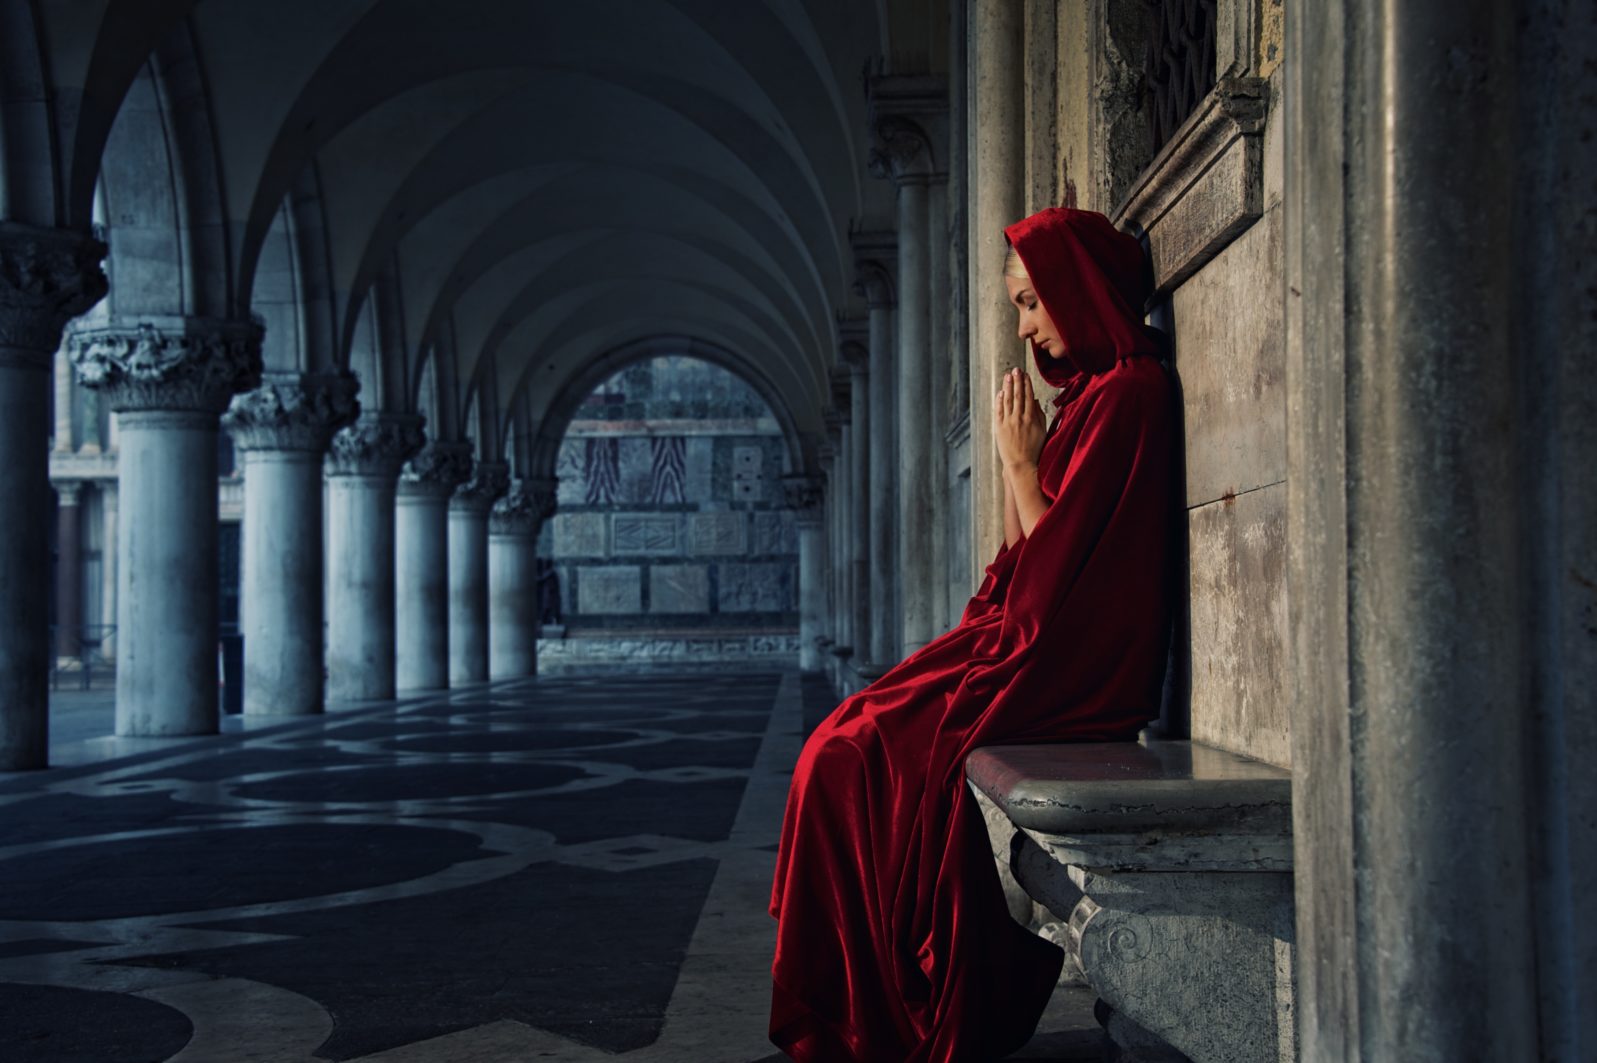 Woman in red cloak praying alone